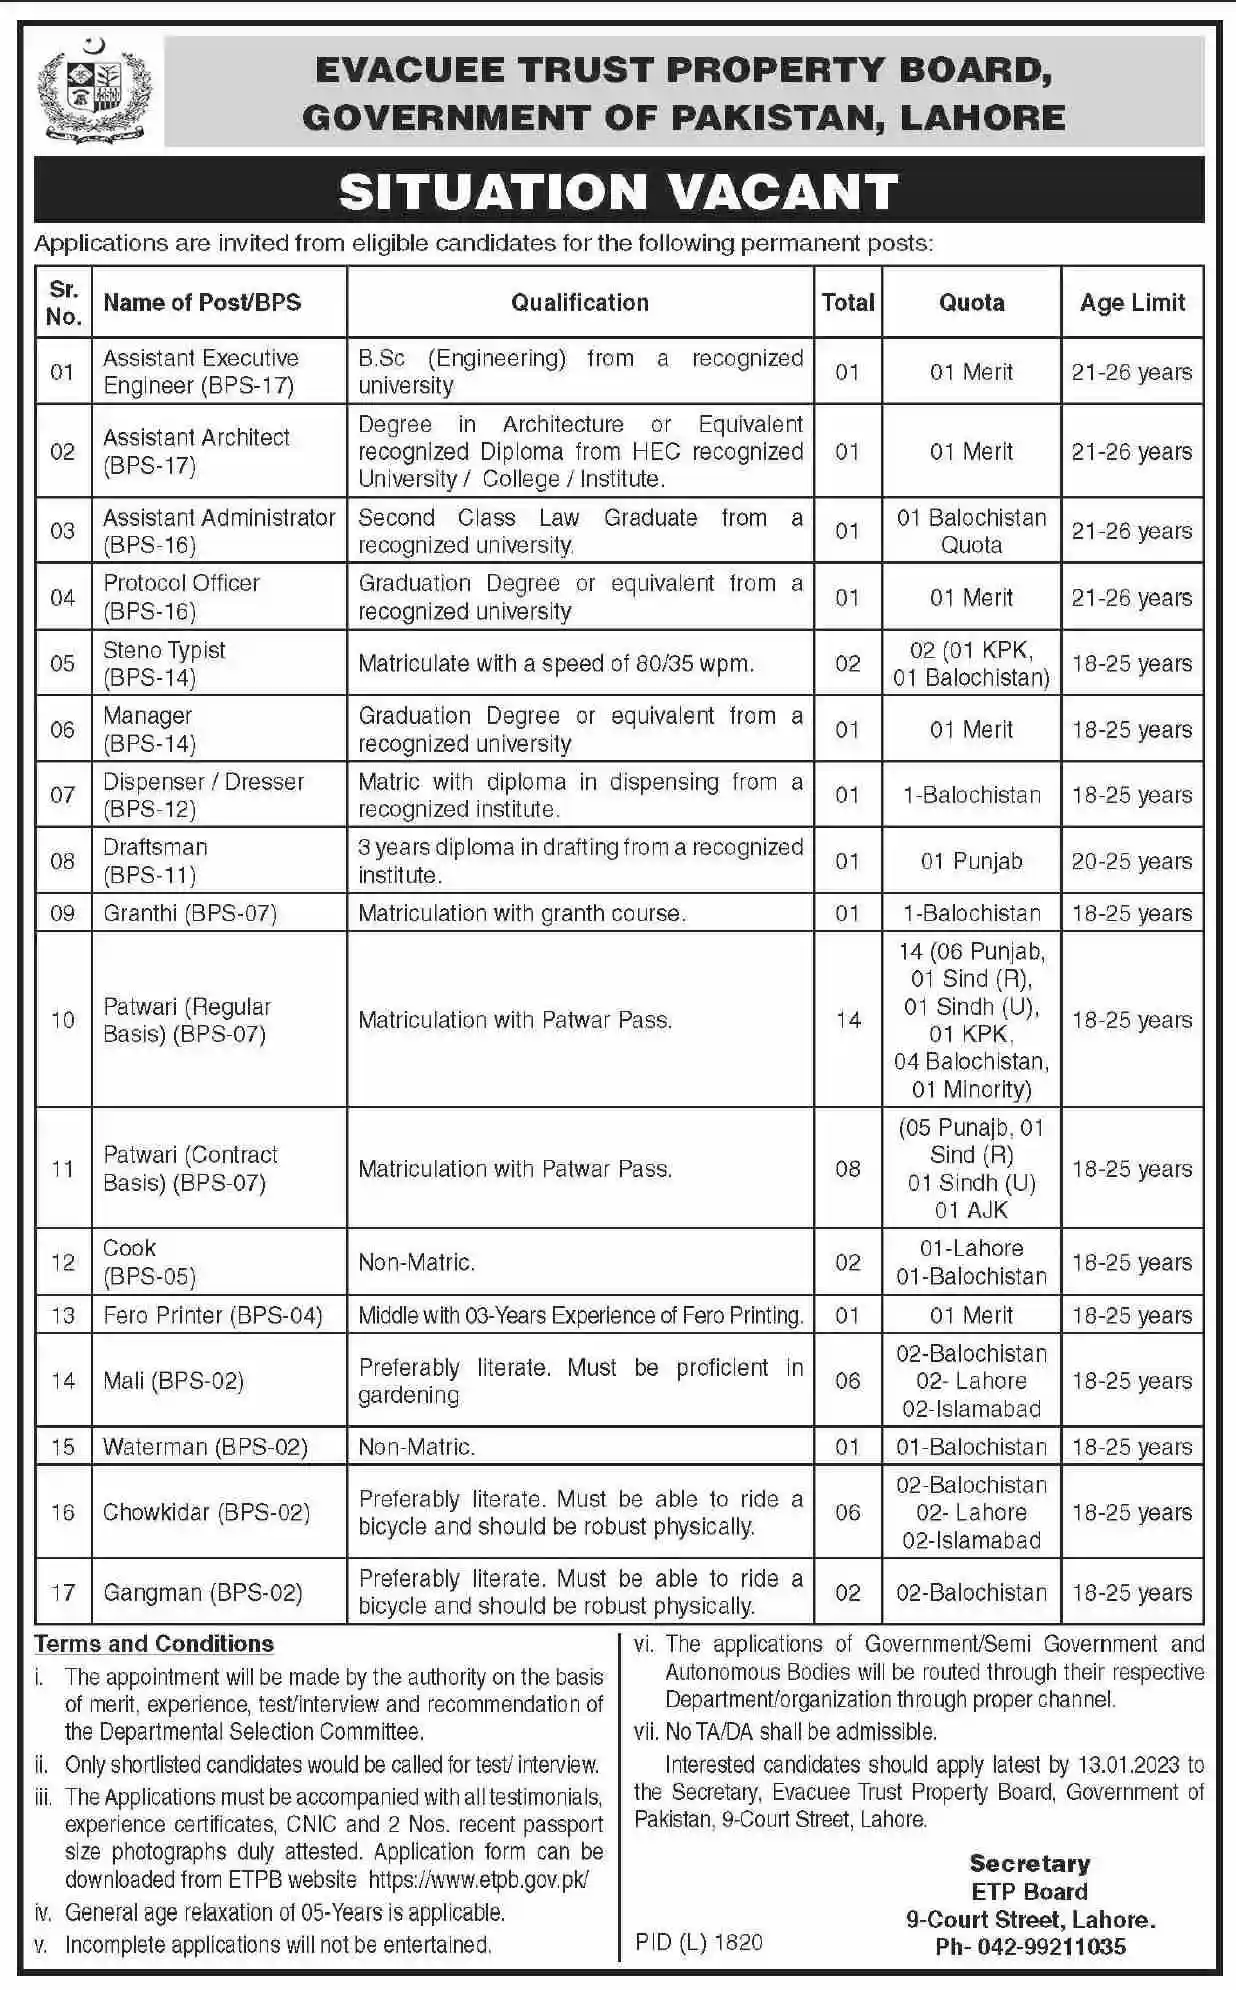 Evacuee Trust Property Board ETPB Jobs 2022-23 Lahore Government of Pakistan